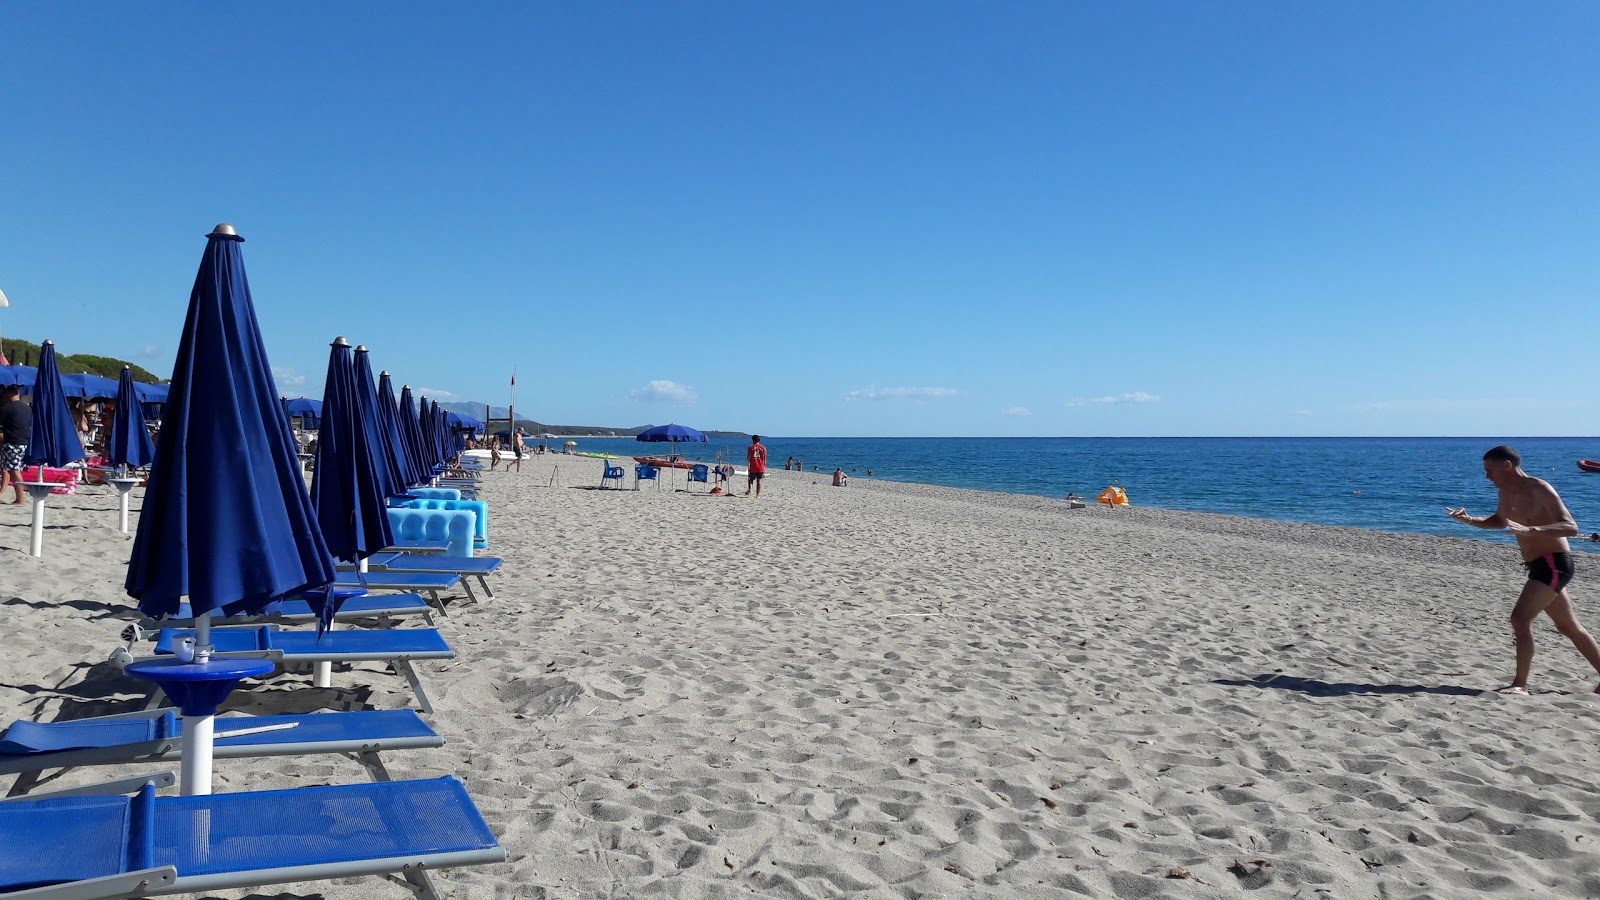 Foto av Spiaggia di Foddini med turkos rent vatten yta